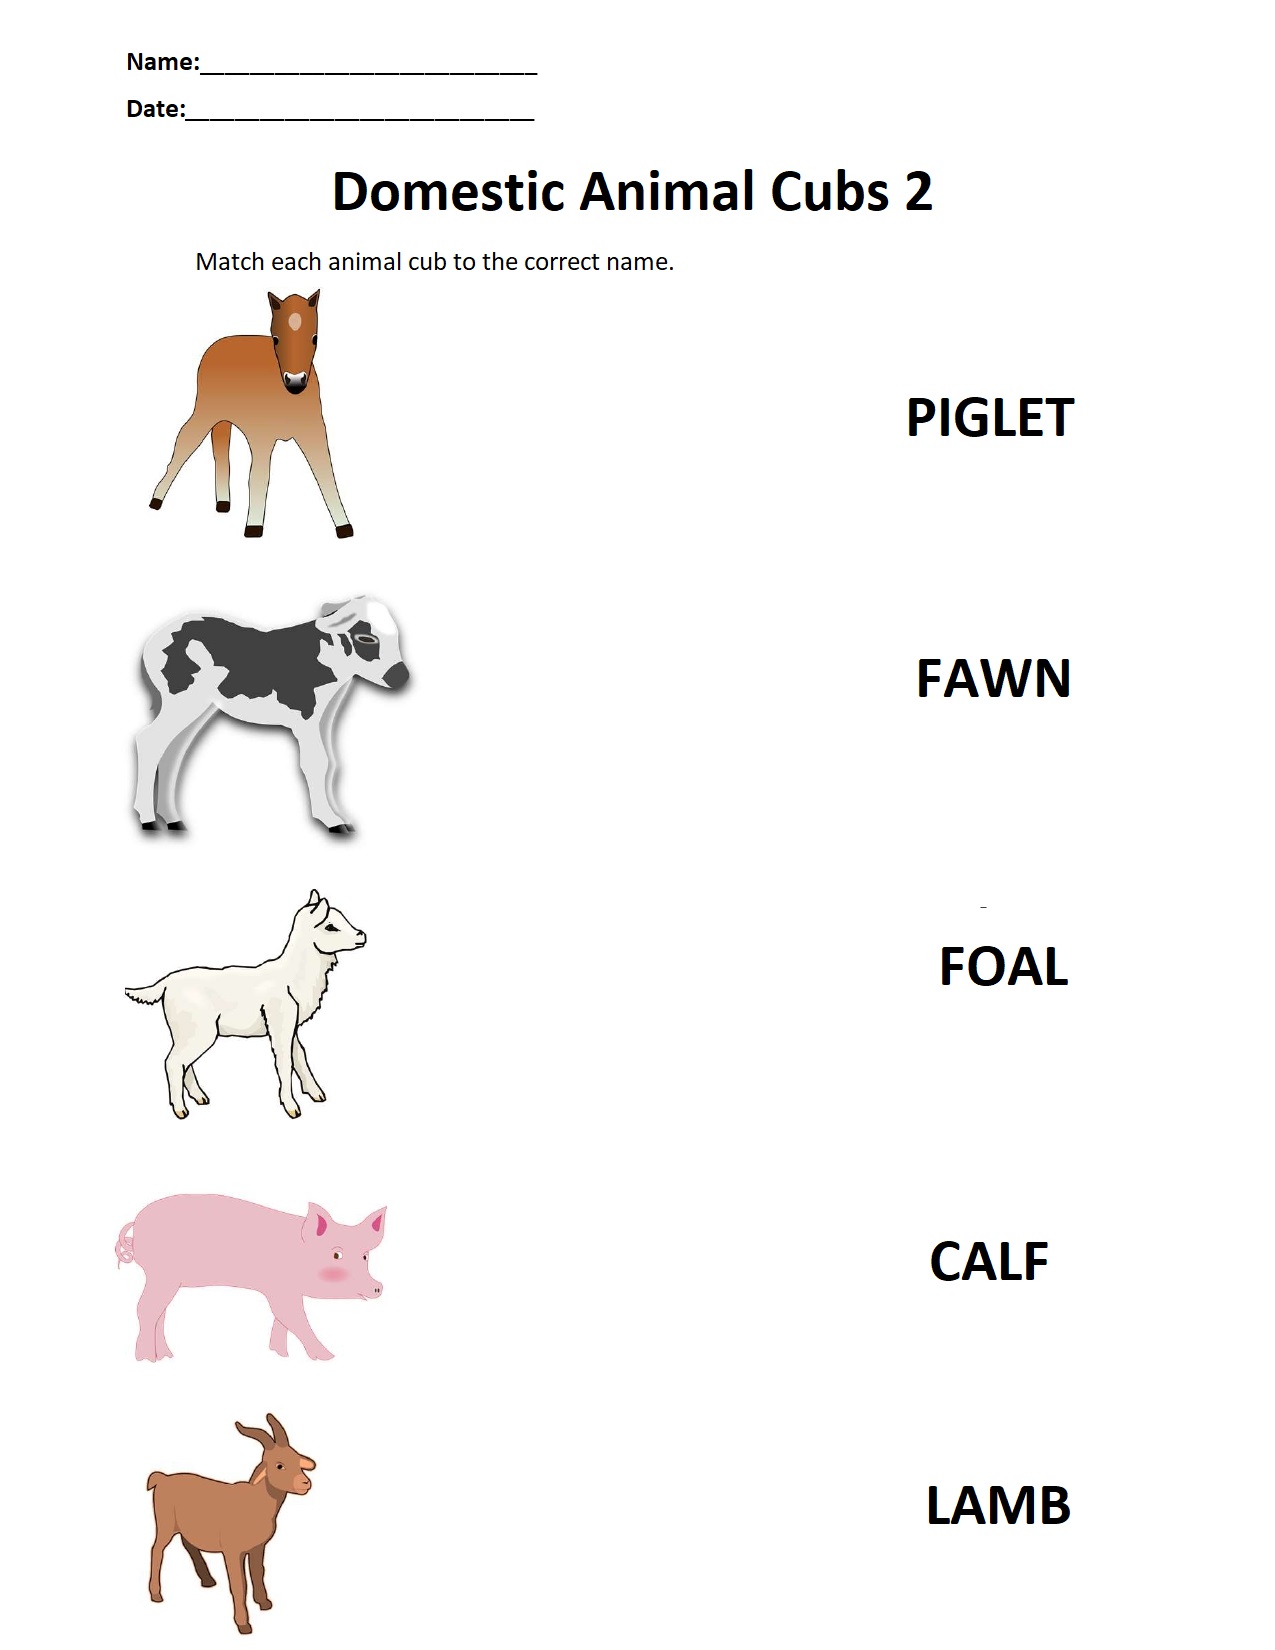 Domestic animal cubs 2.jpg